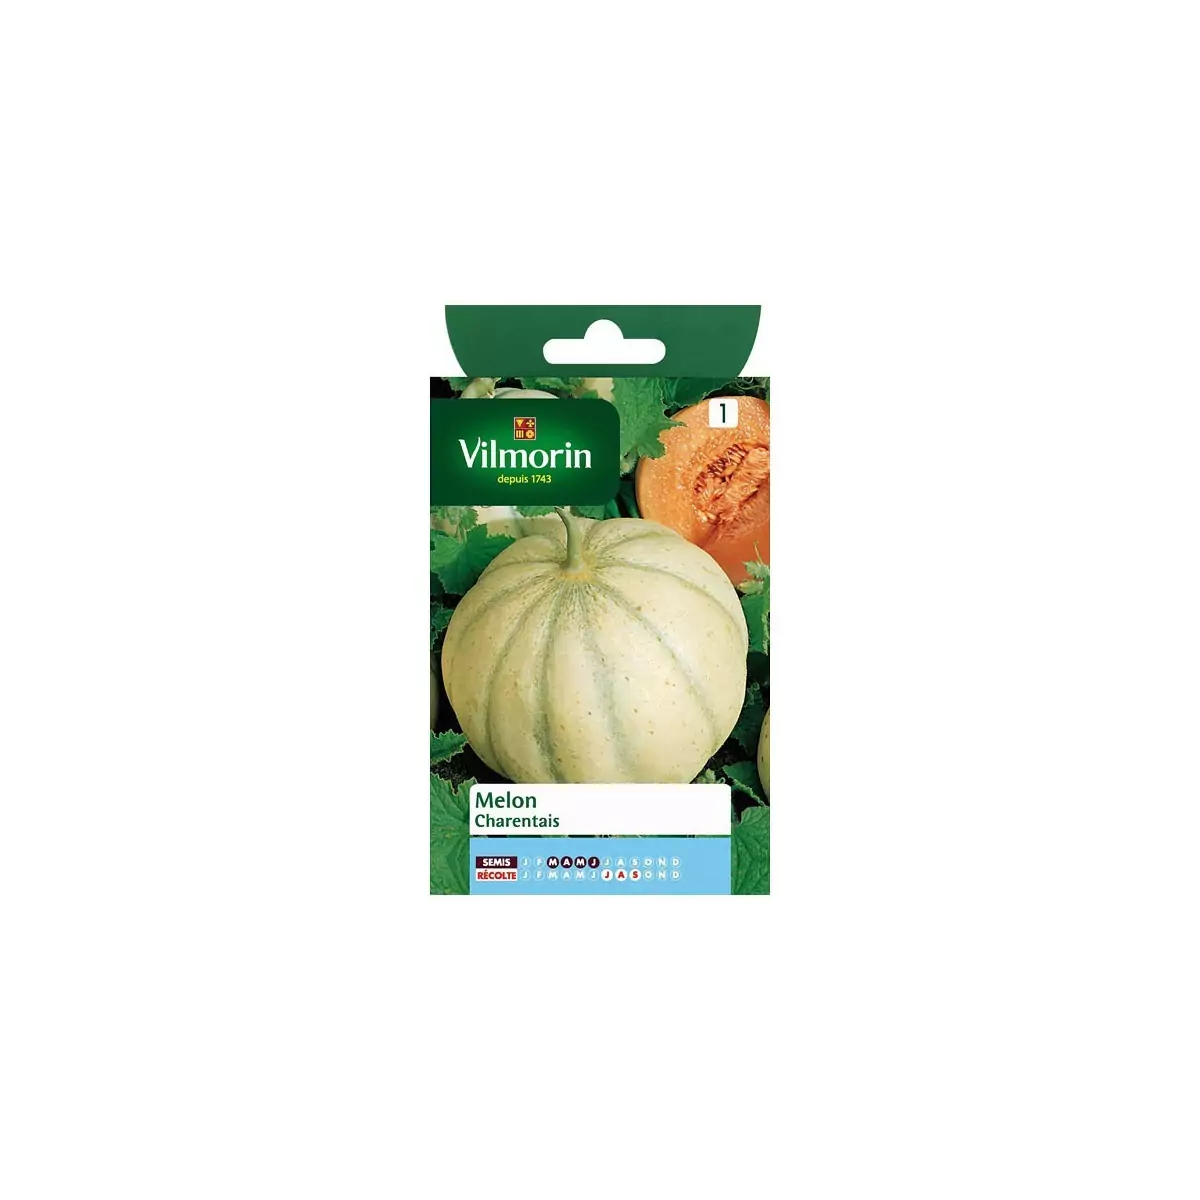 Melon Charentais product sheet